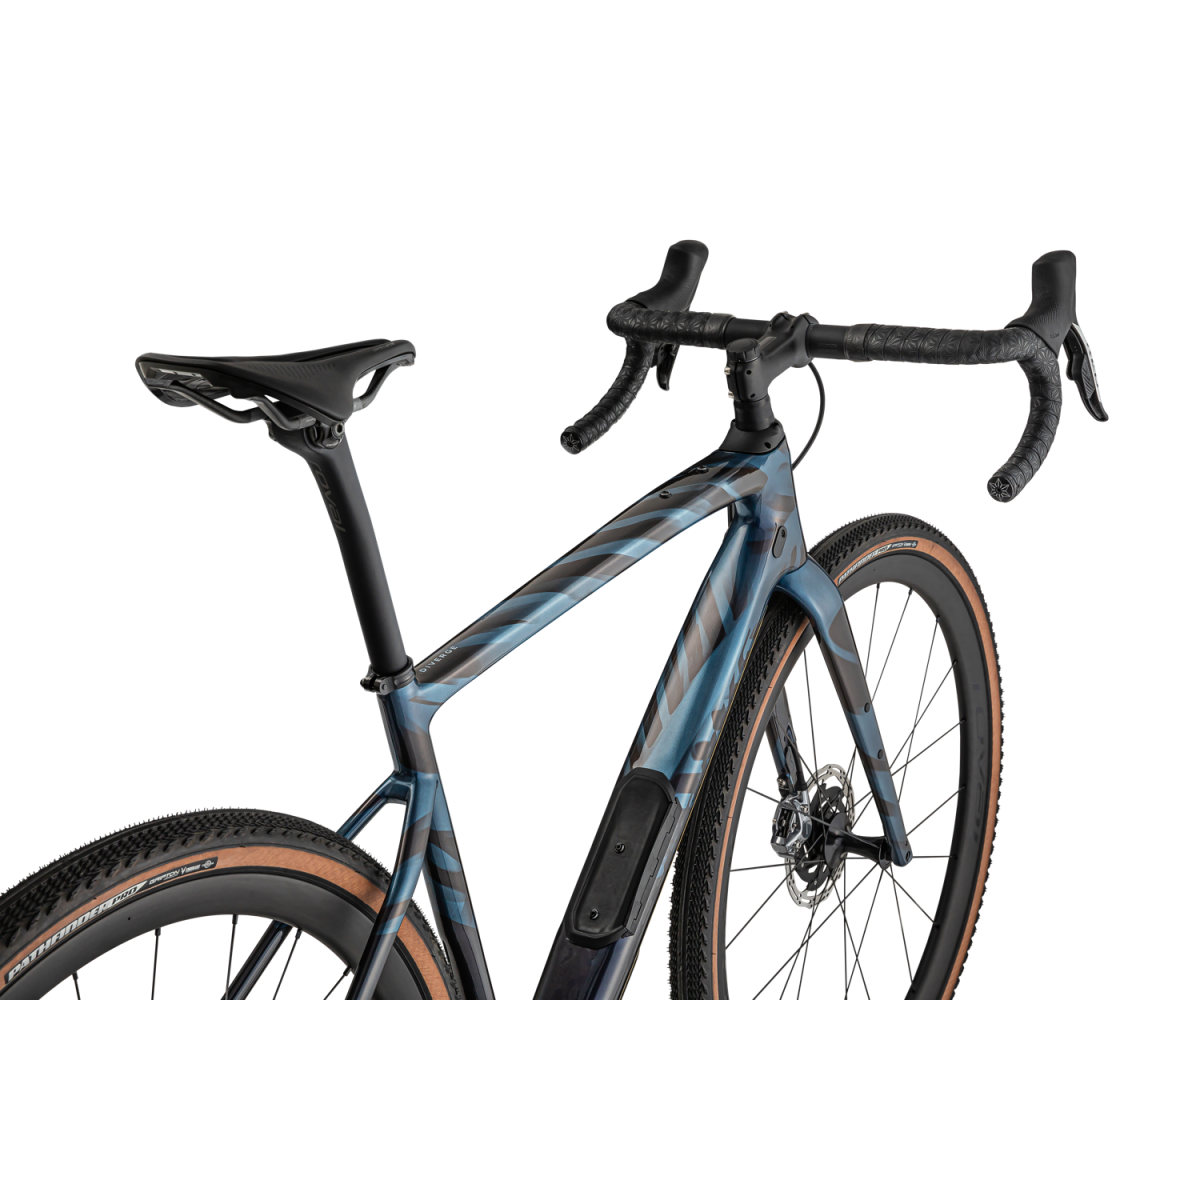 S-Works Diverge Gravel dviratis / Dusty Blue - Wild